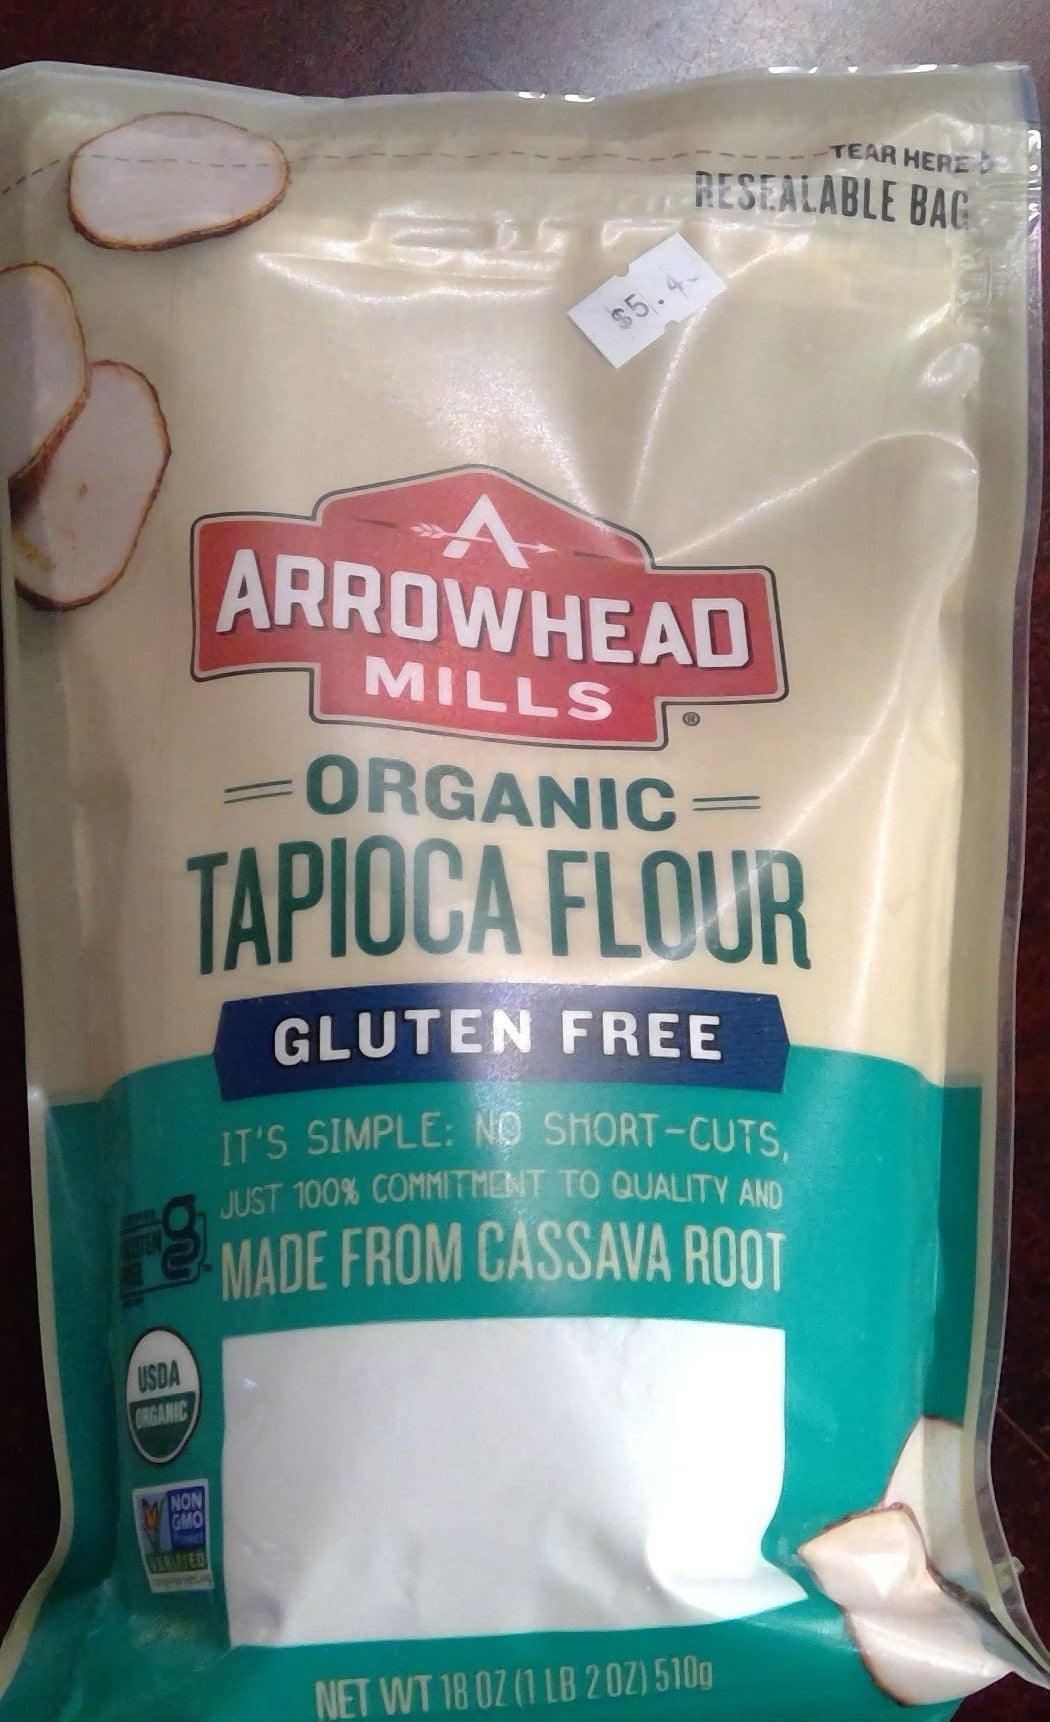 Tapioca Flour, Organic, Gluten Free, Arrowhead Mills